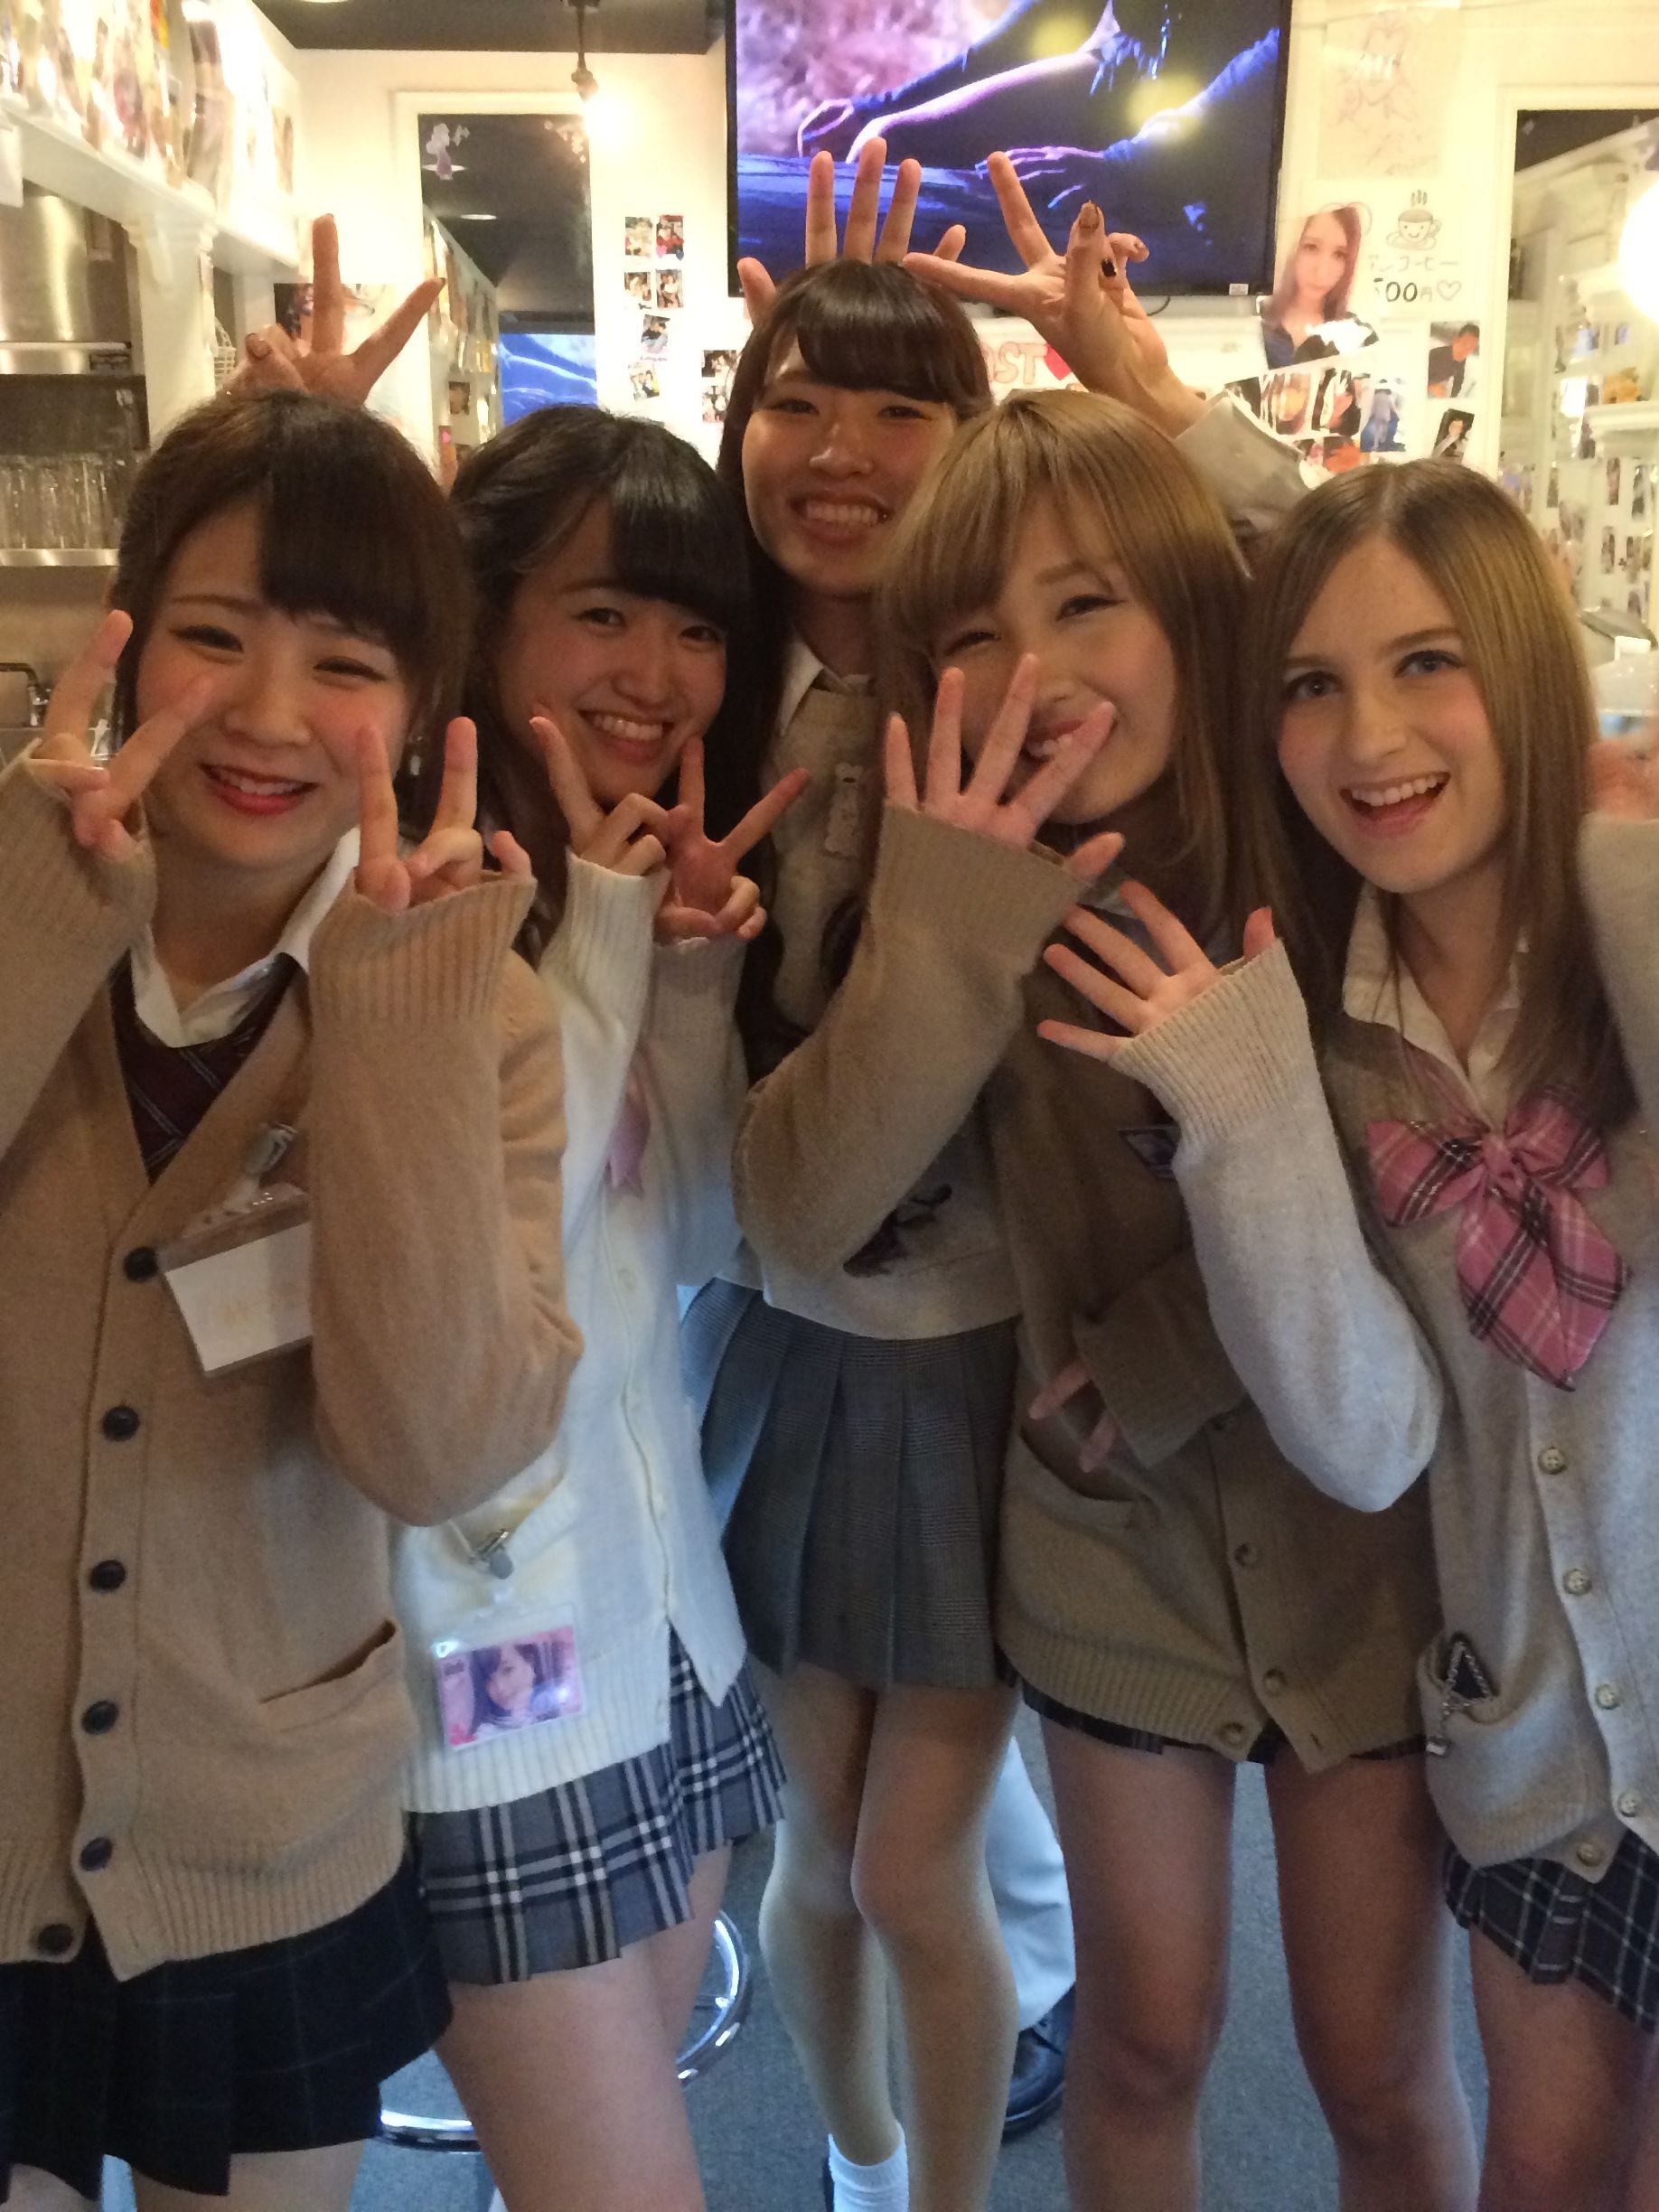 Petite Teen College Girls - Japan school girl culture: The dark truth | CNN